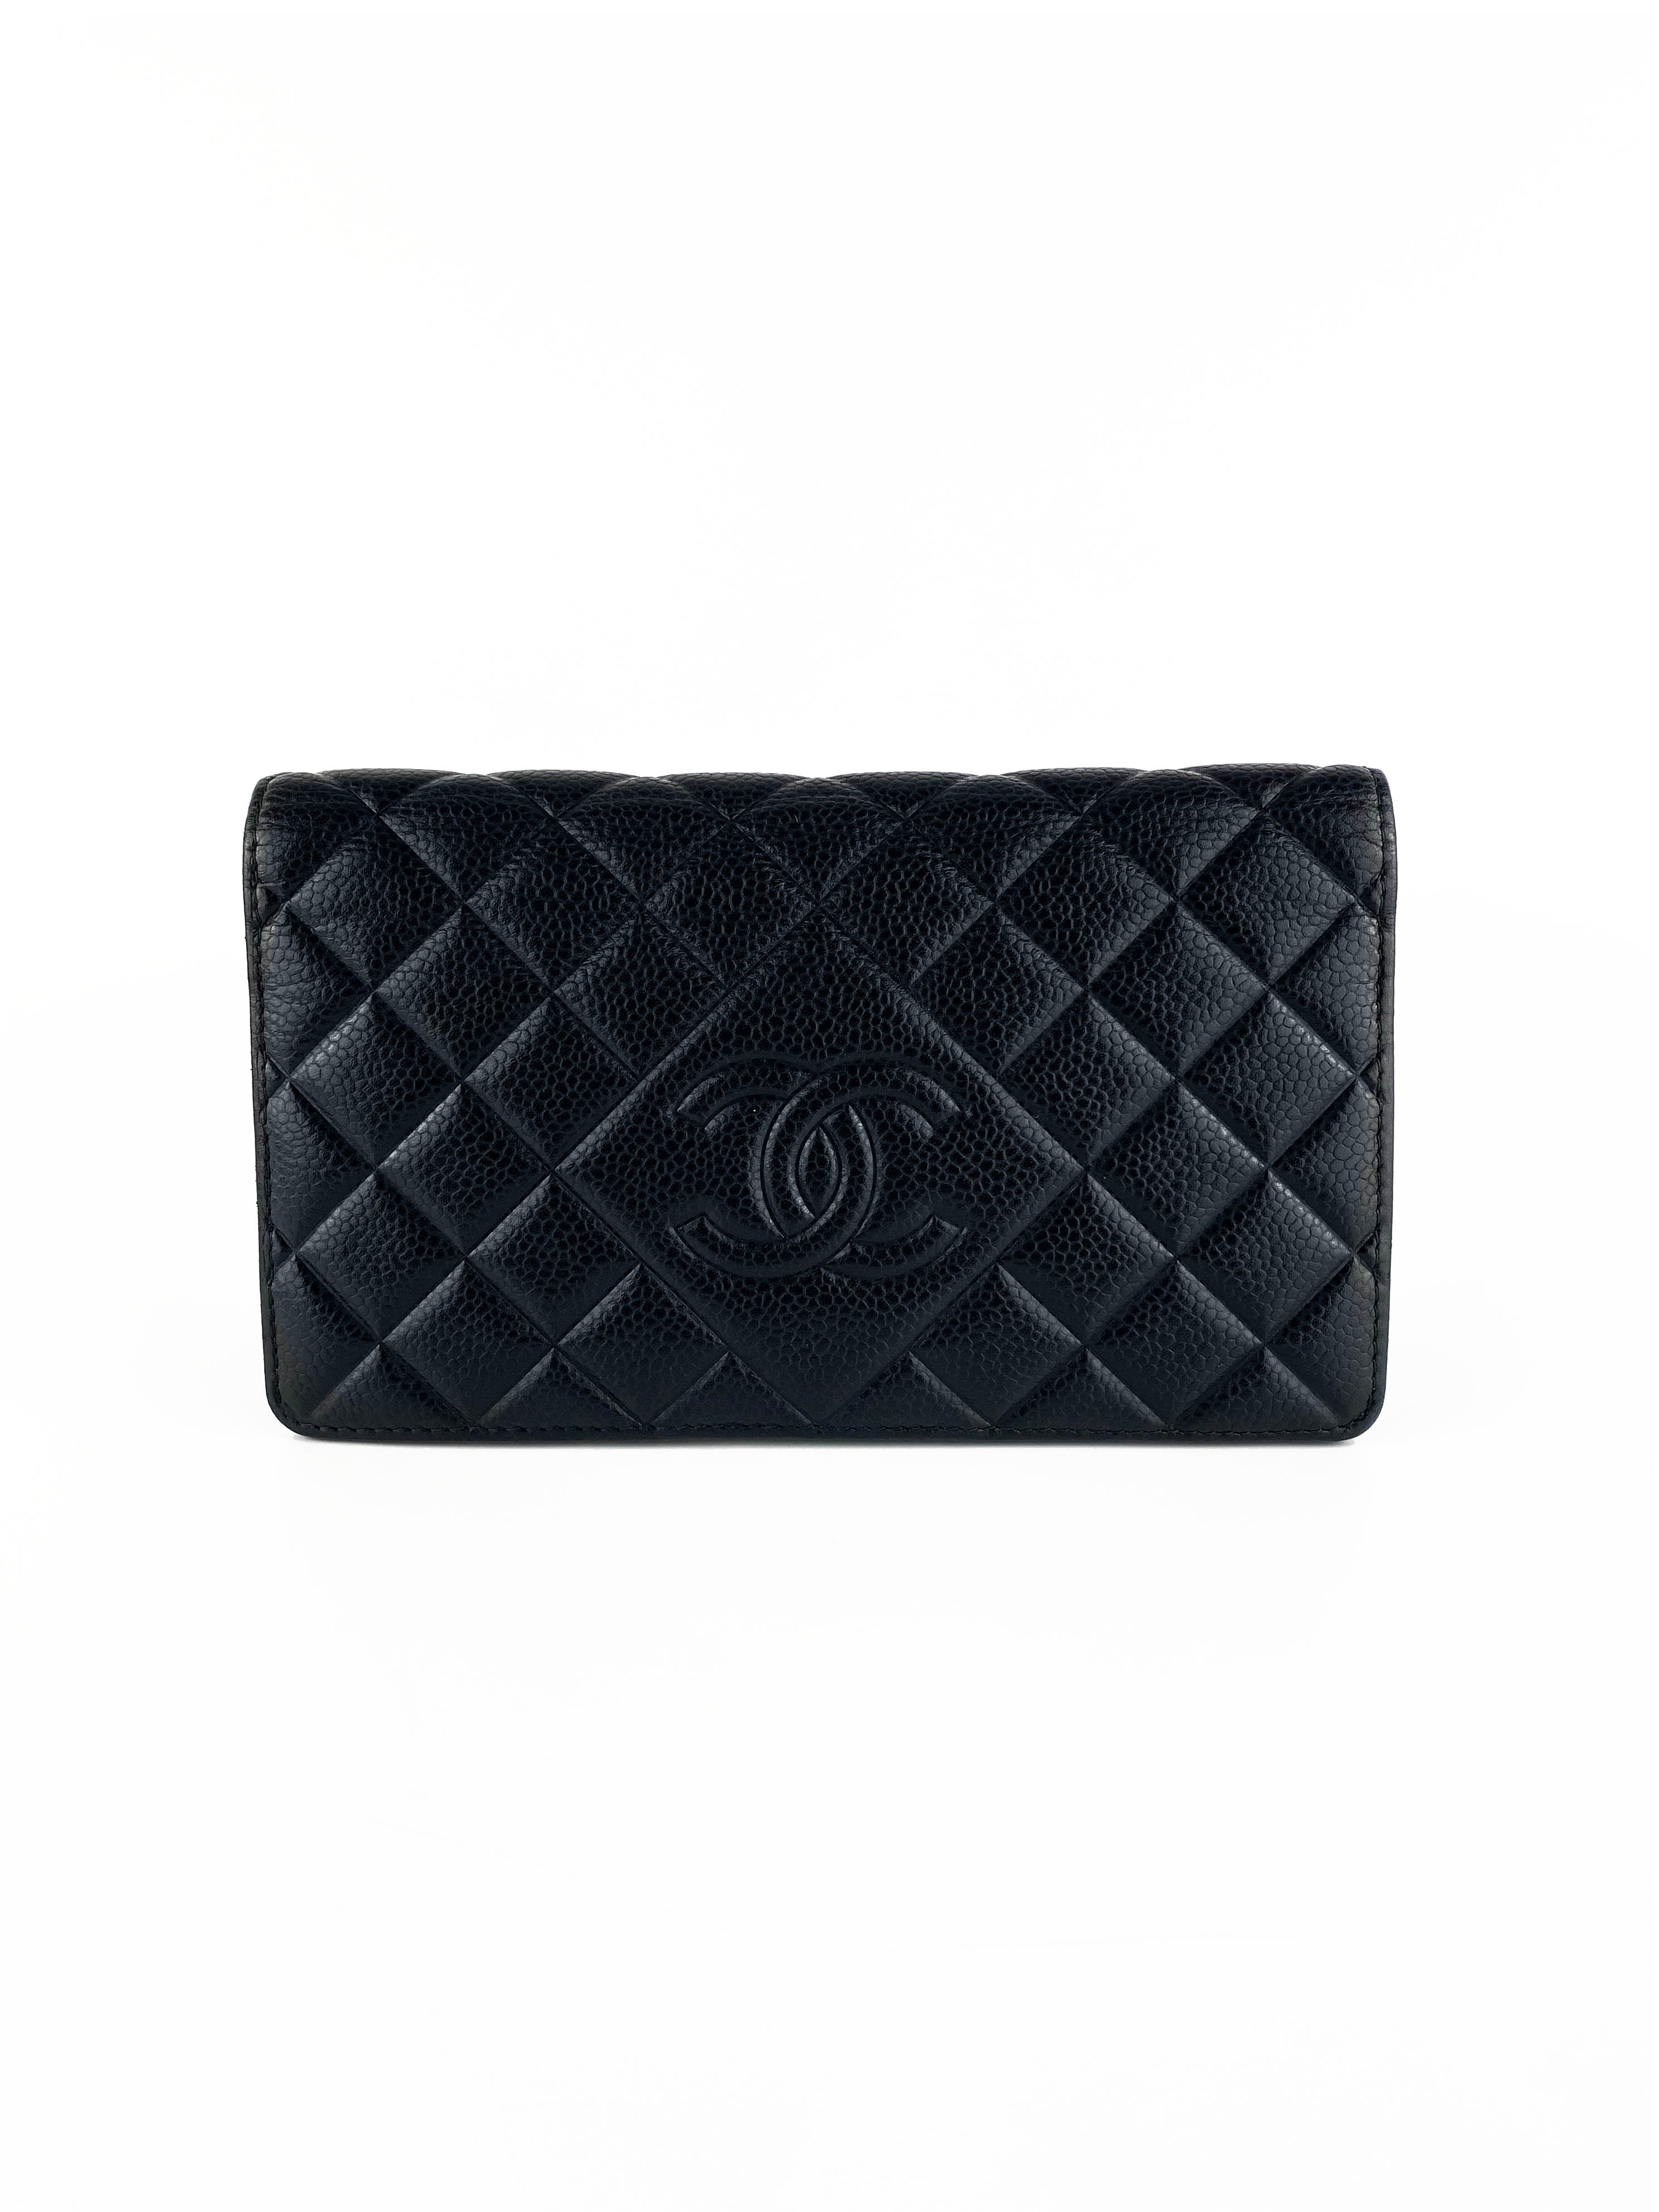 Chanel Black Long Caviar Wallet